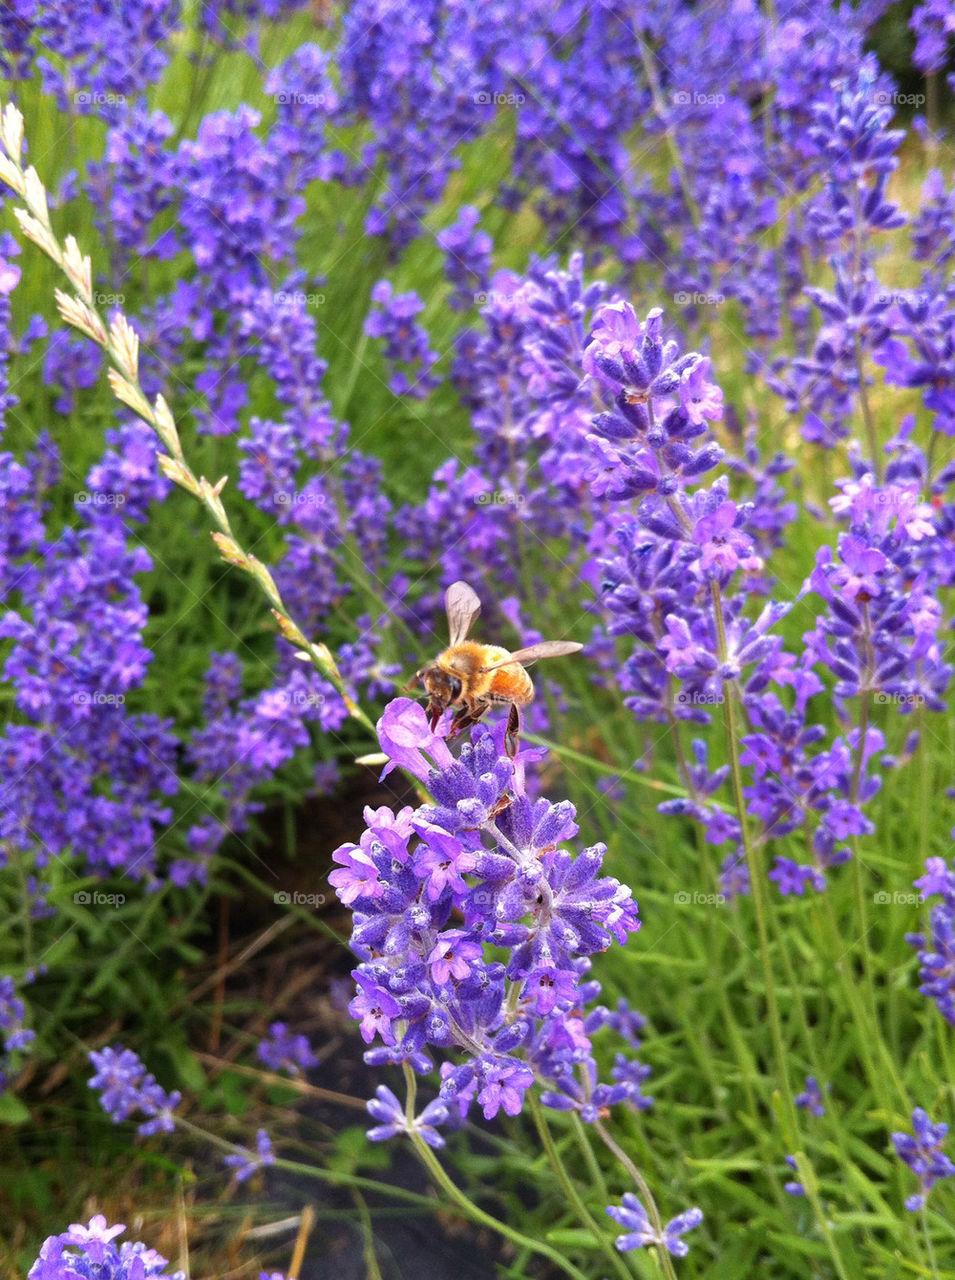 flowers garden park violet by surjake1